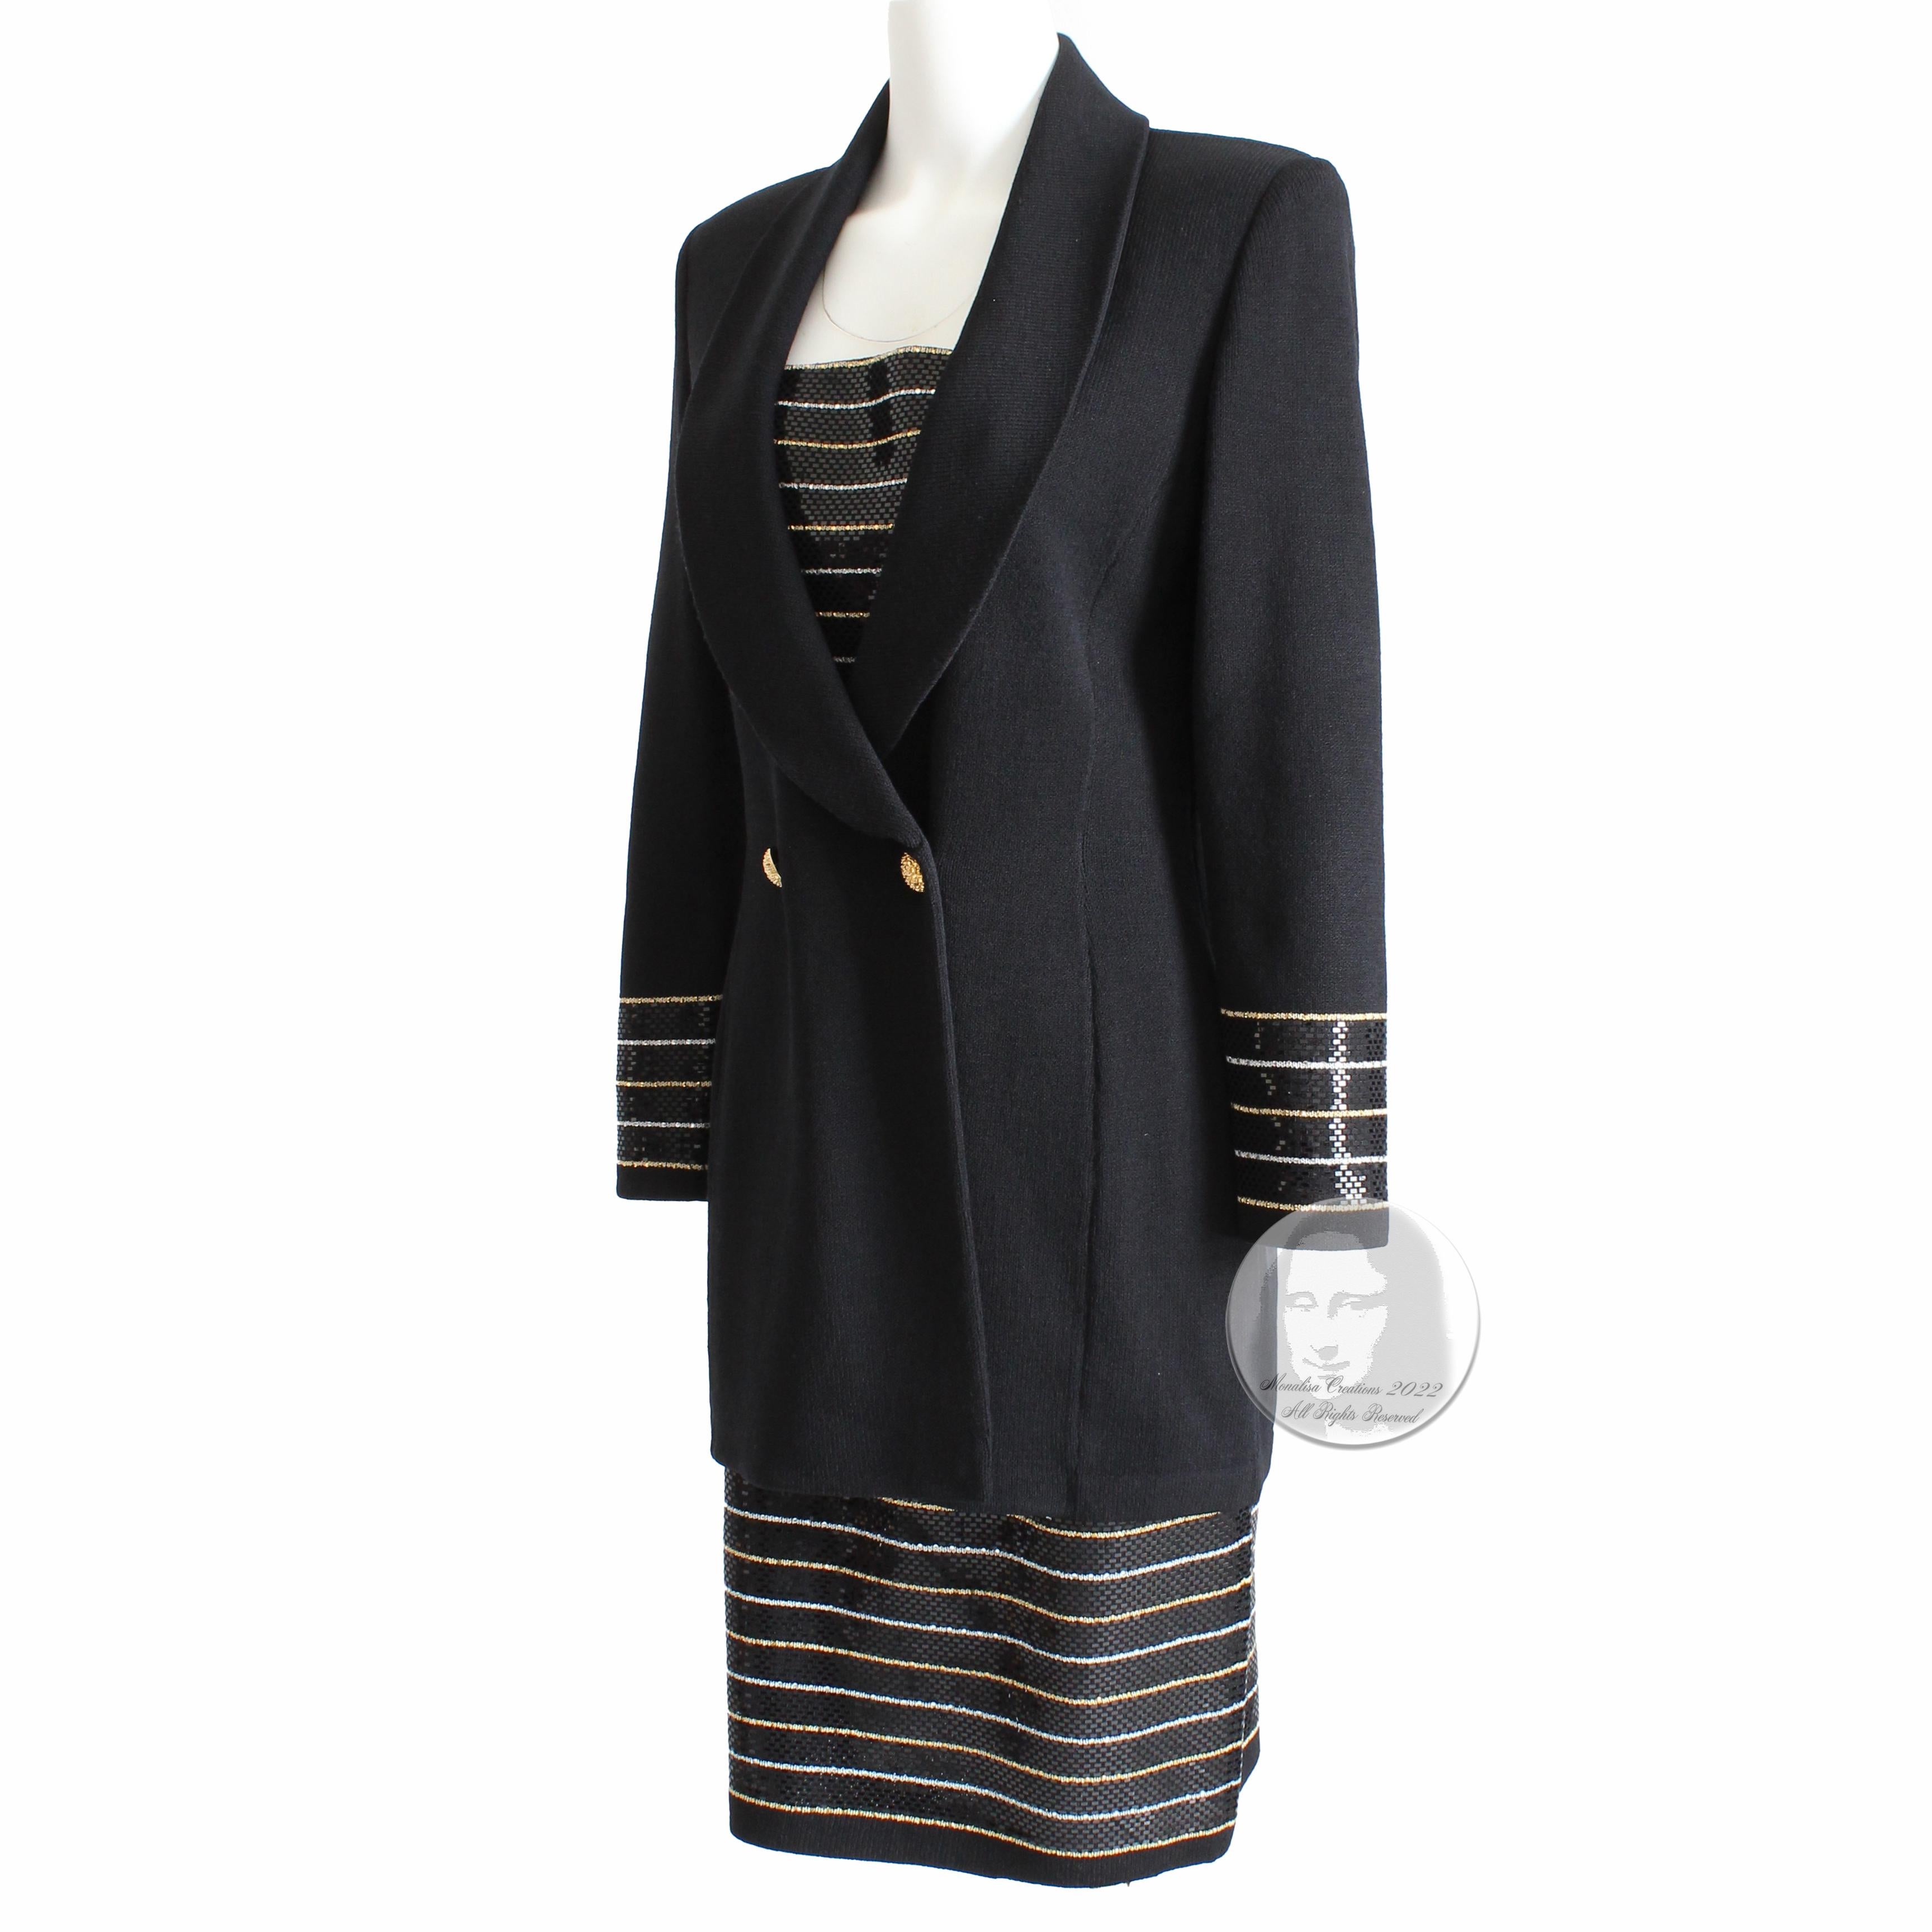 Women's St John Suit Evening 2pc Jacket & Skirt Embellished Knit Black Gold White Sz 6  For Sale